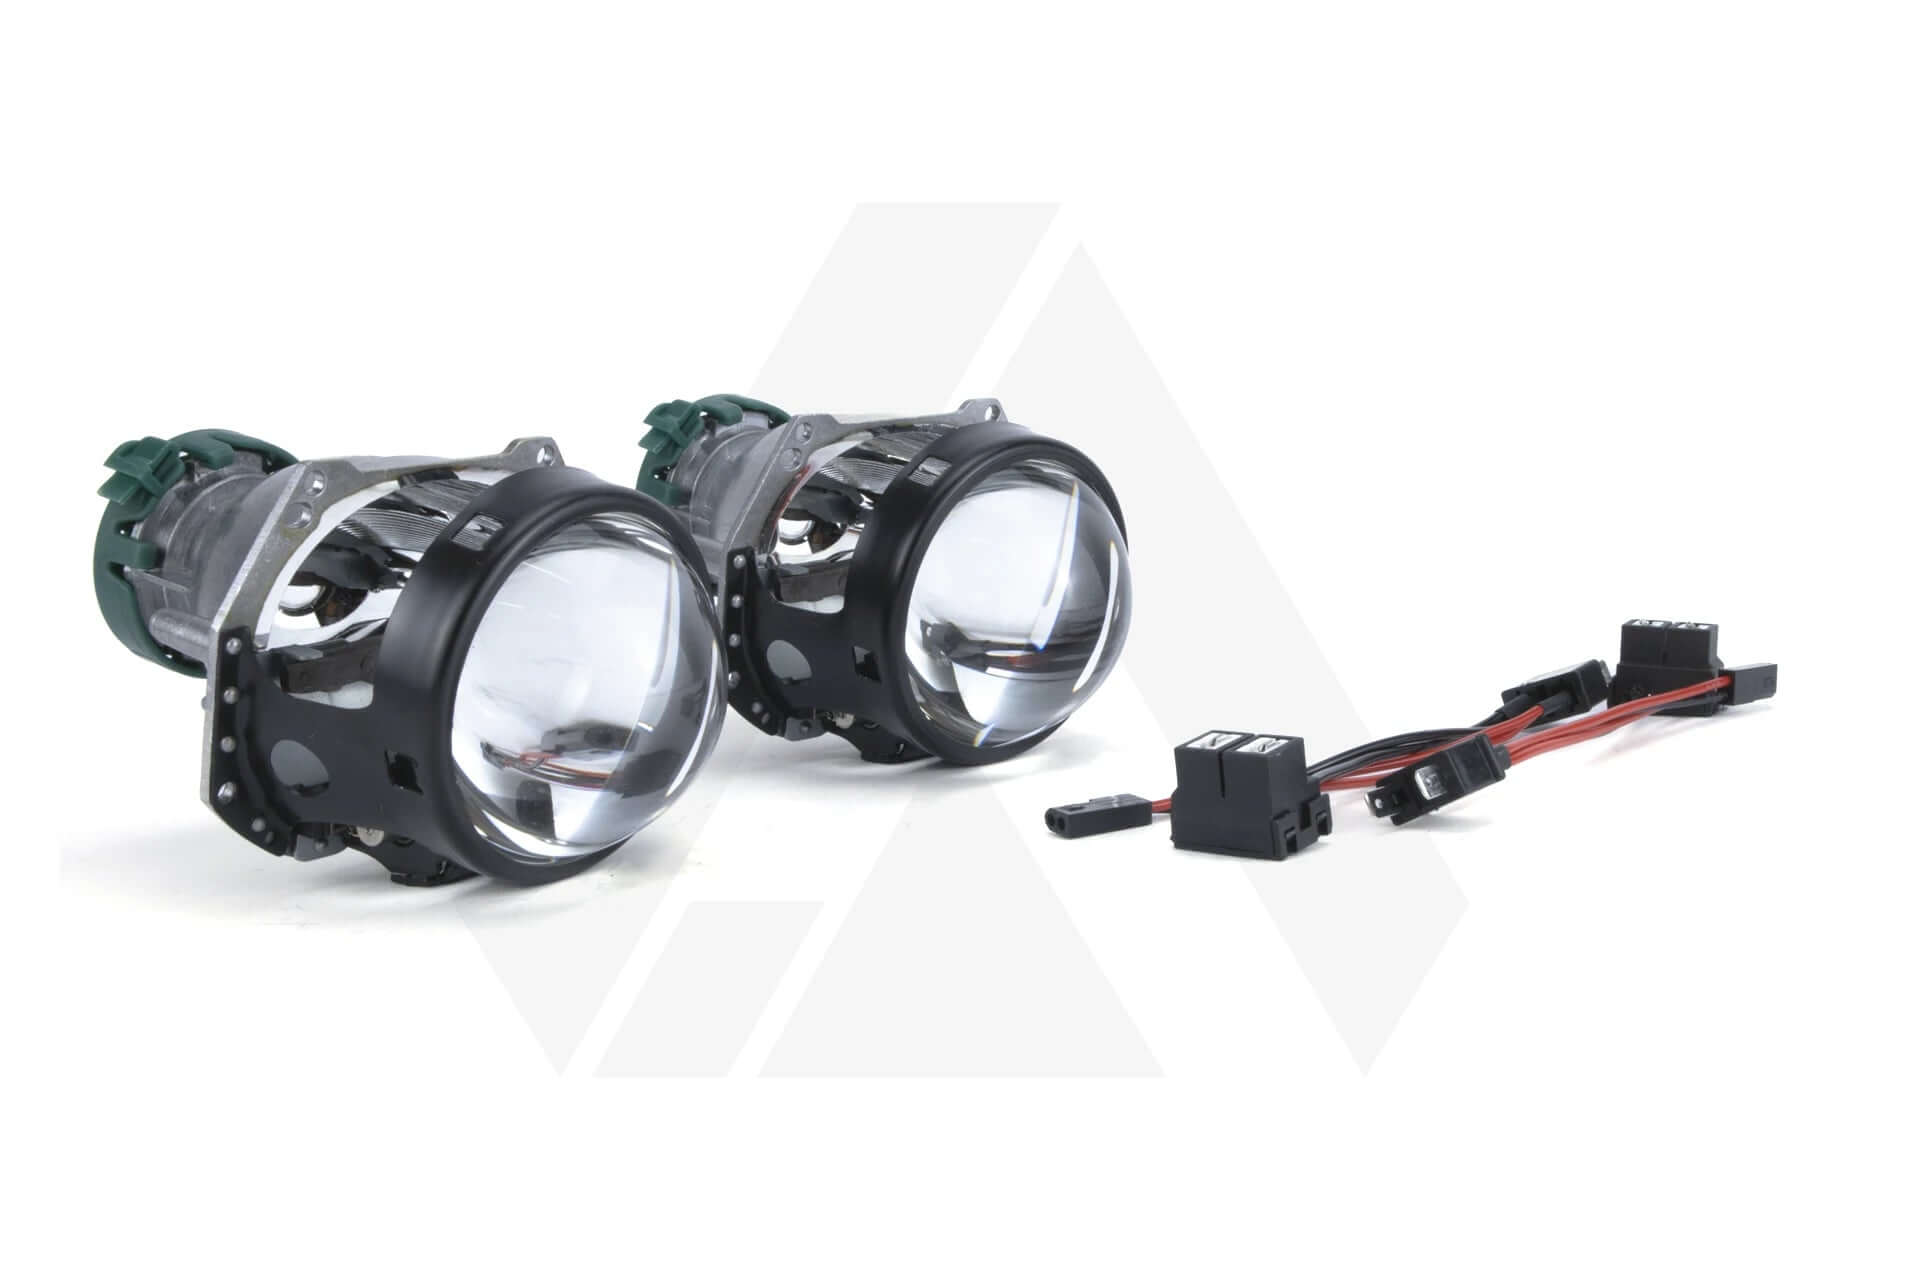 VW Golf MK VII 12-17 bi-xenon HID projector headlight repair & upgrade kit